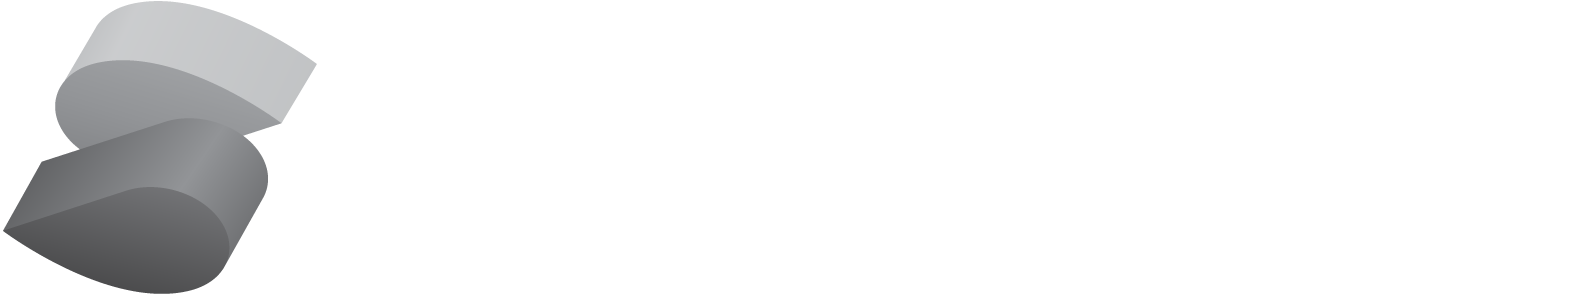 framework logo